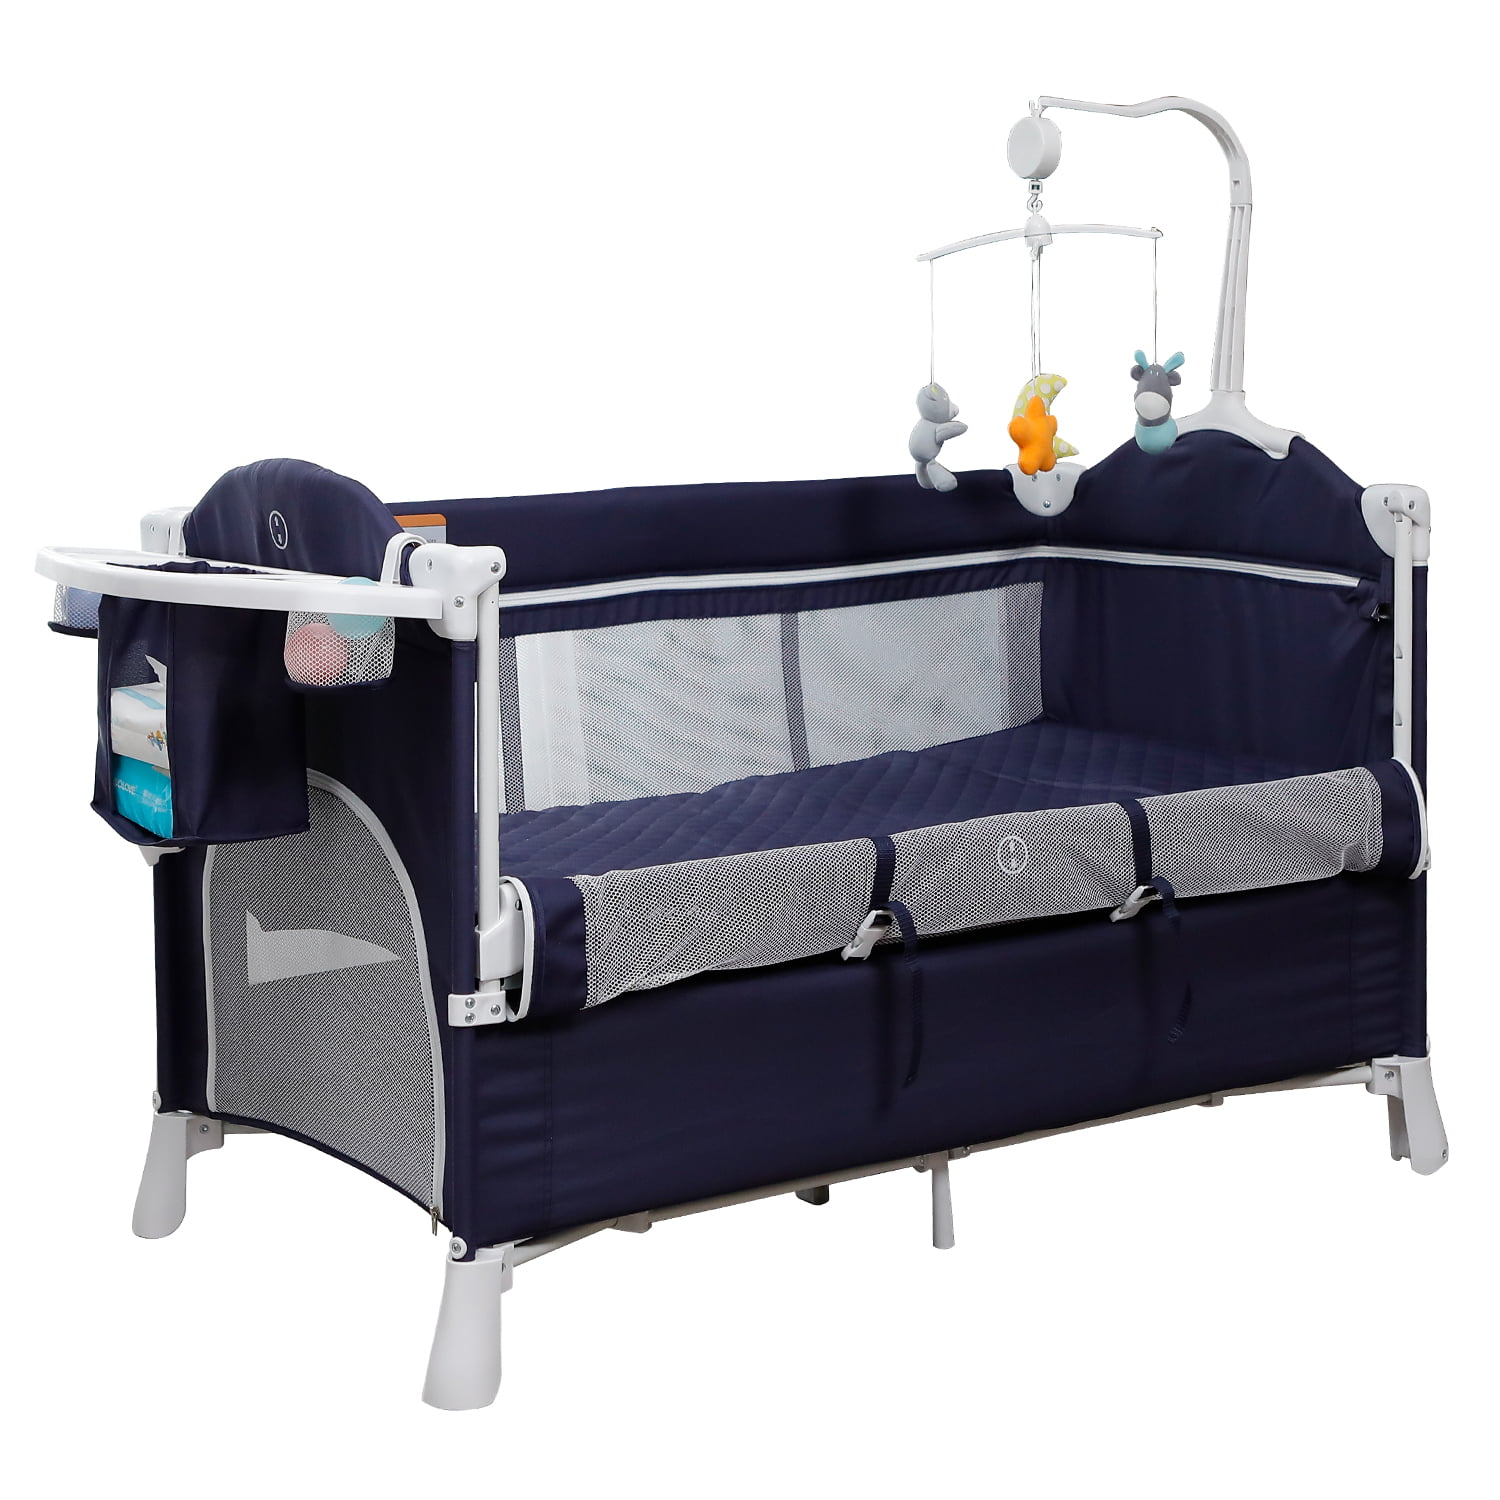 BABY BASSINET CRIB Infant Nursery Center Bed Playard Sleeper Cradle Playpen 